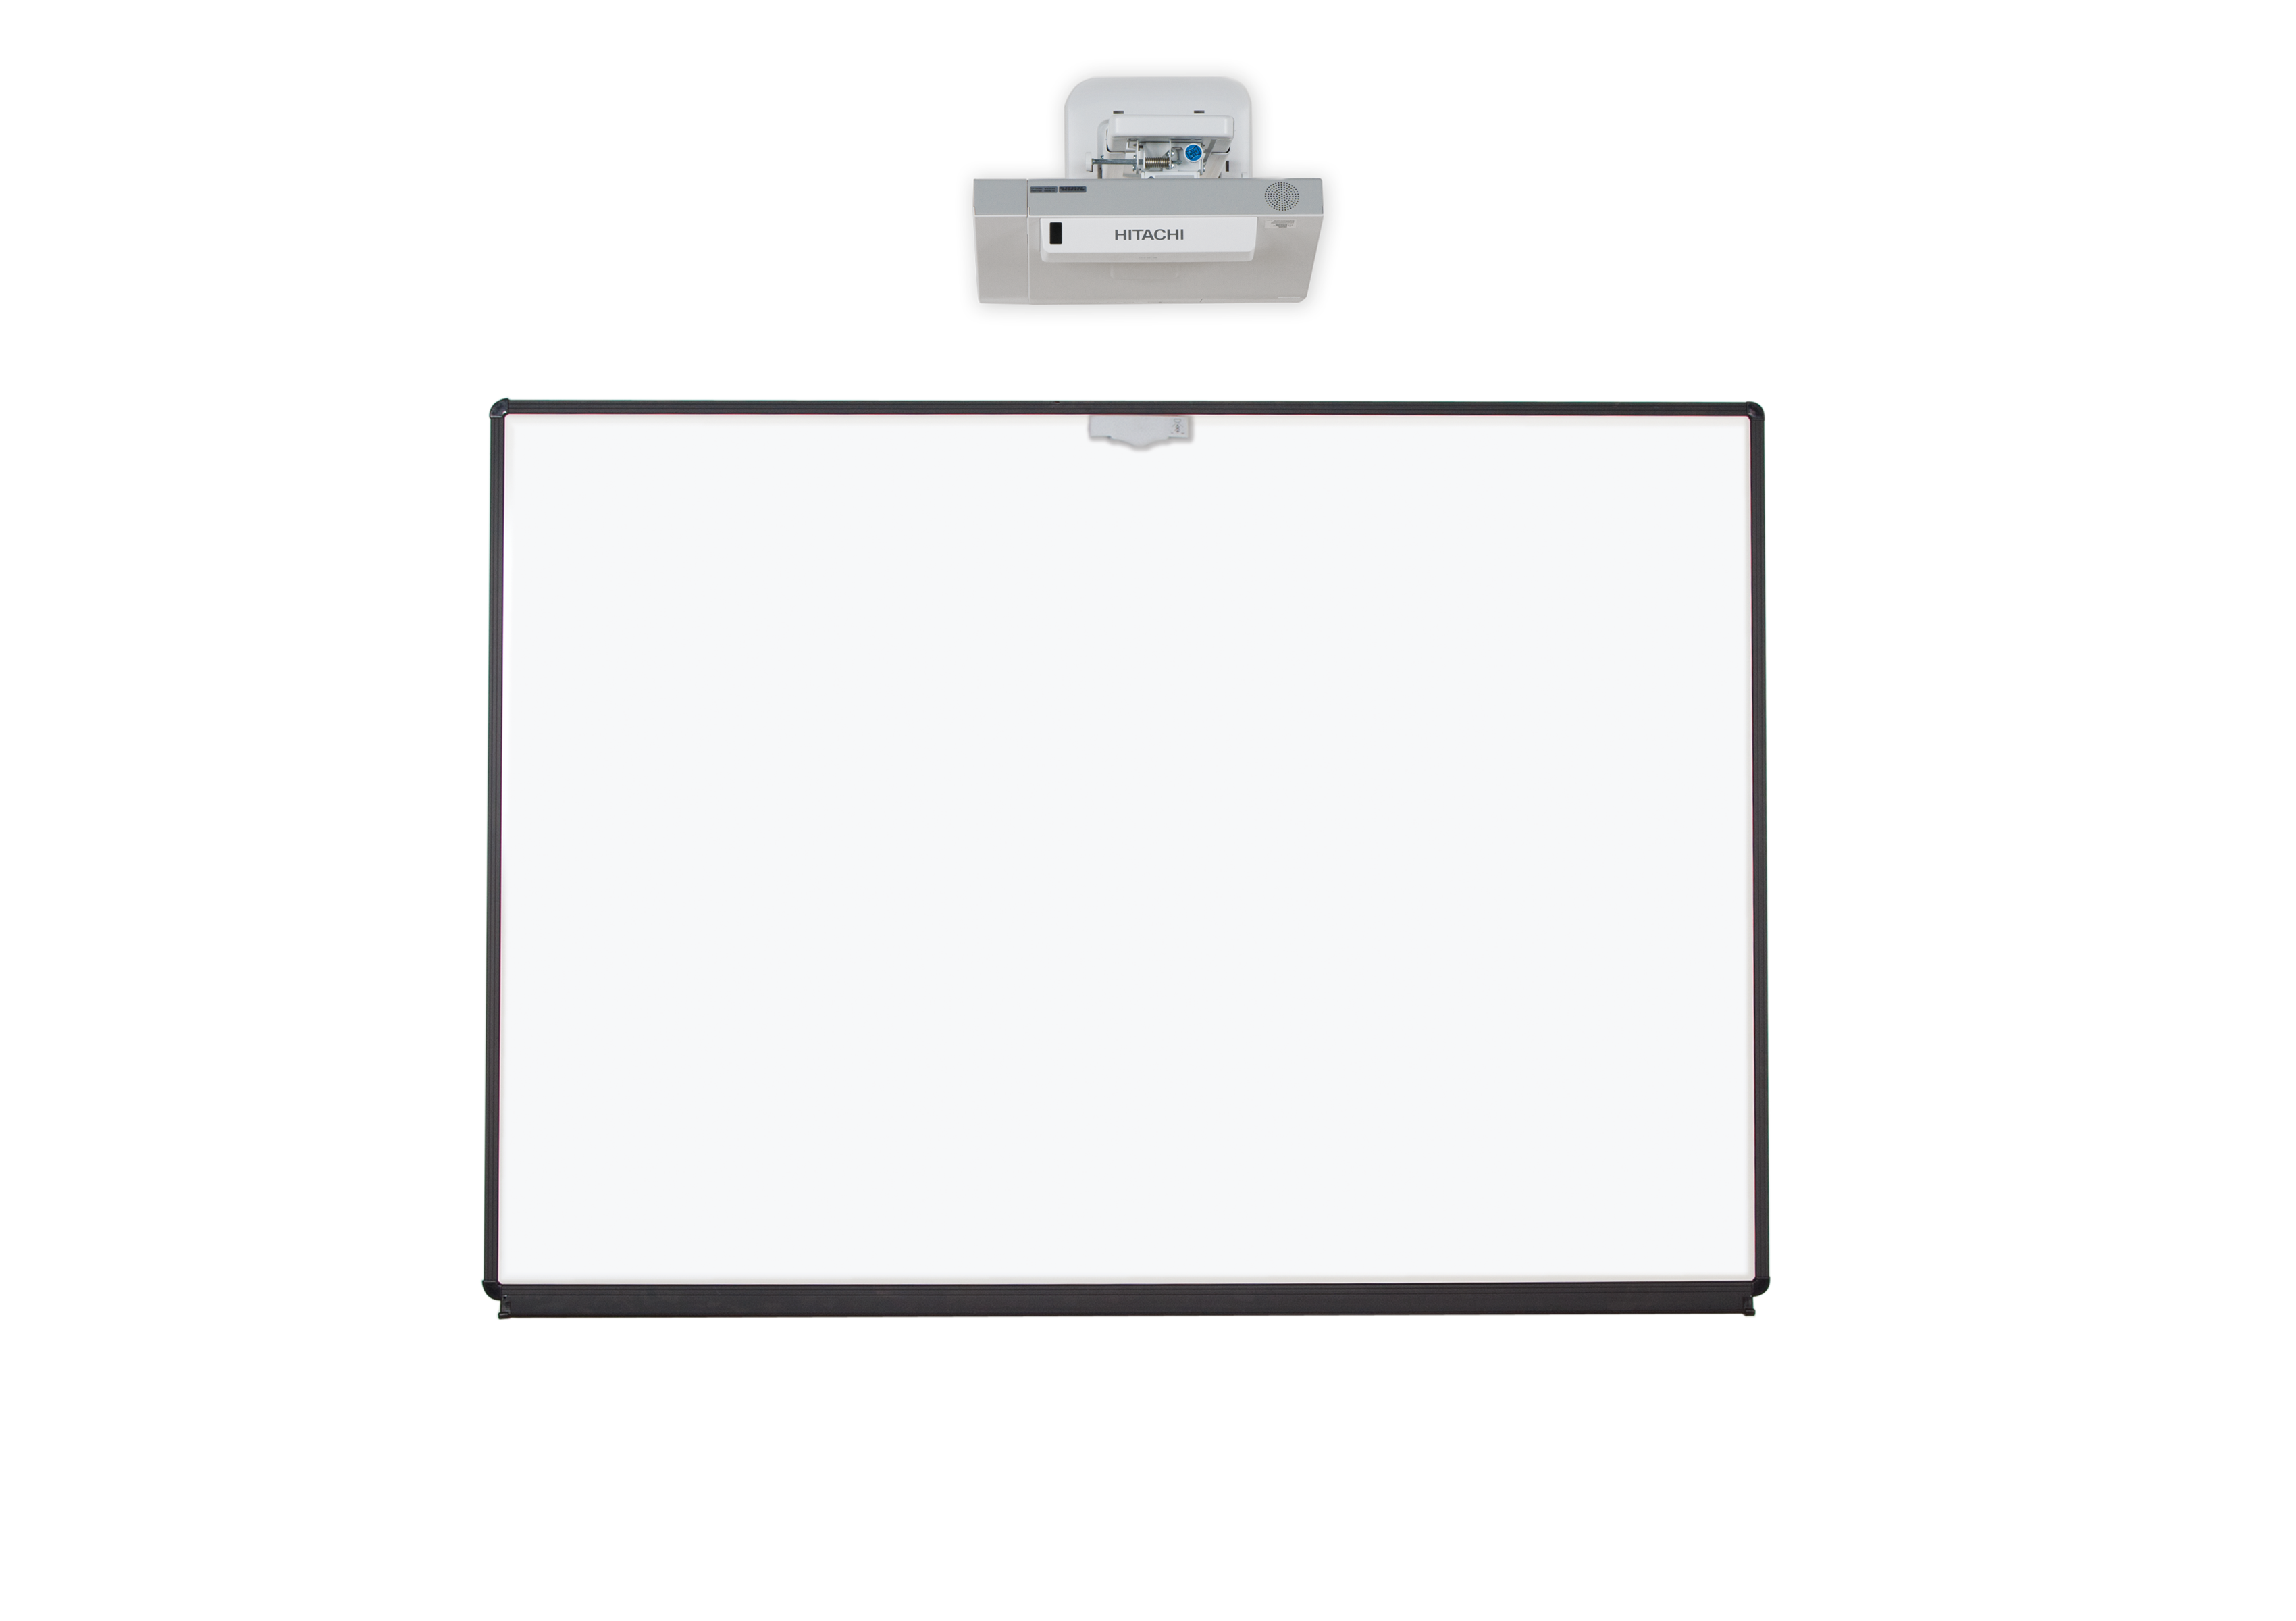 celexon Whiteboard Projektions-Schreibtafel Expert 240 x 150 cm PEN